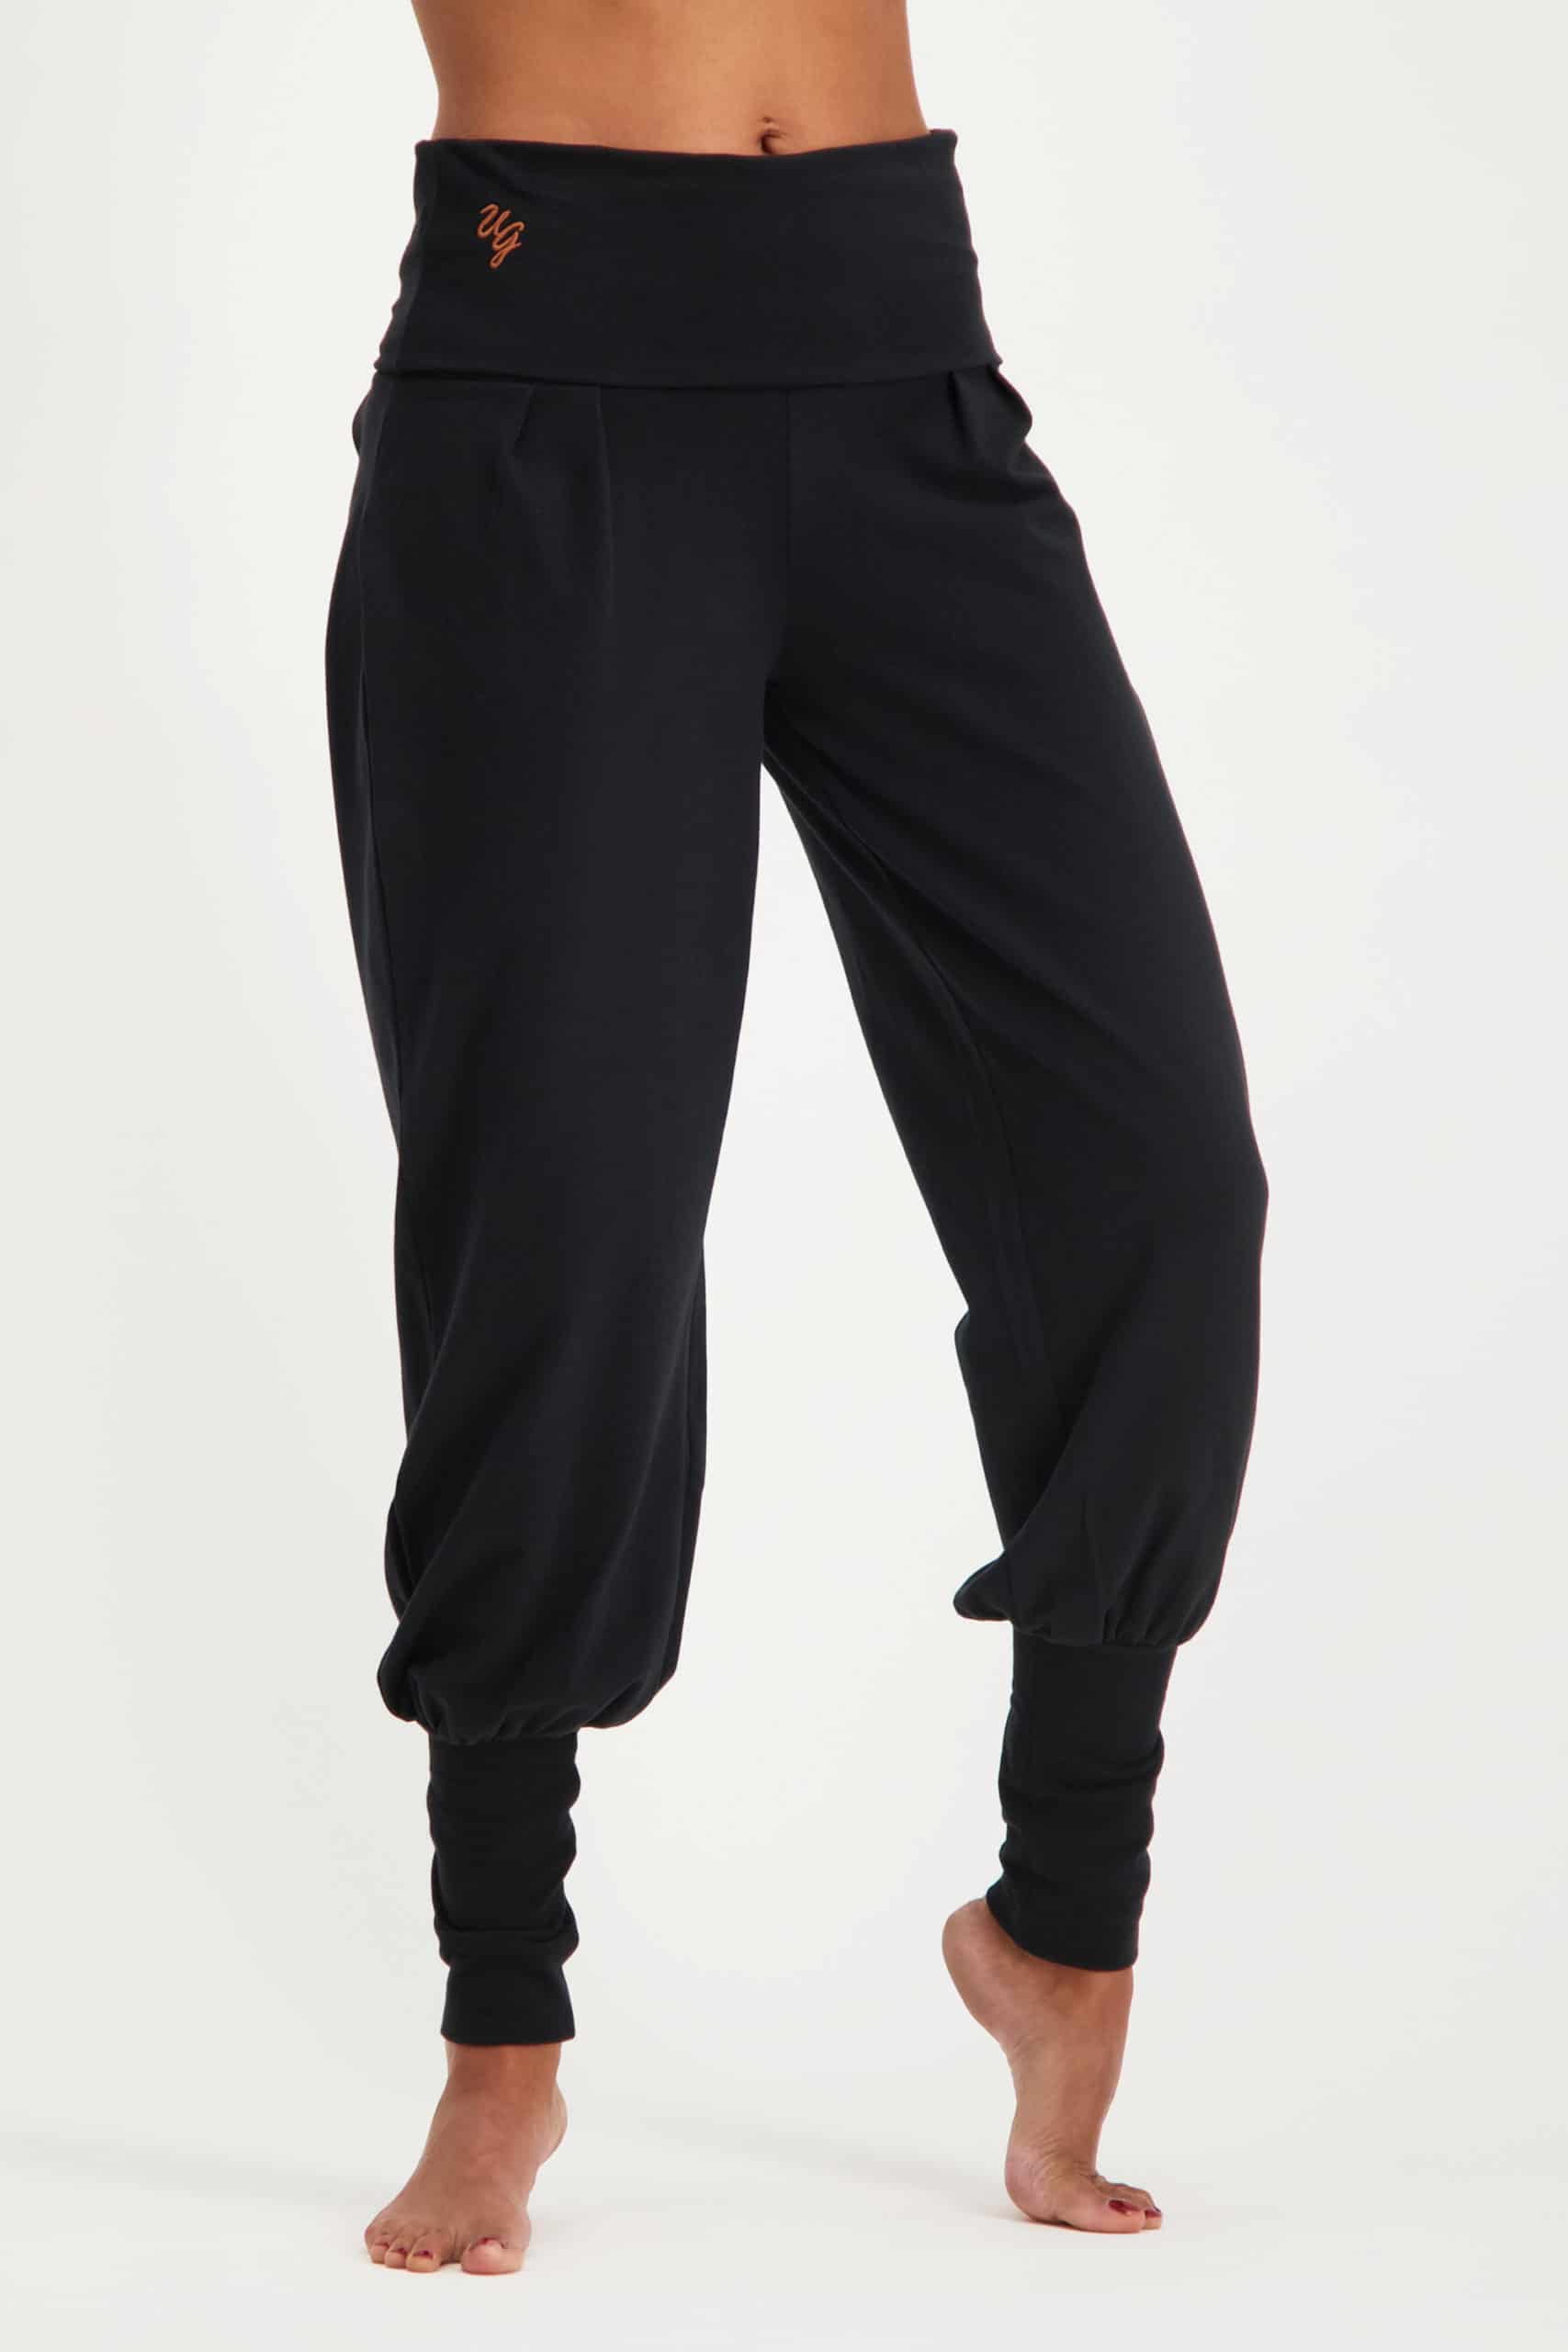 Cotton Yoga Pants With Pockets in Black, Harem Pants Women, Meditation Pants  -  UK